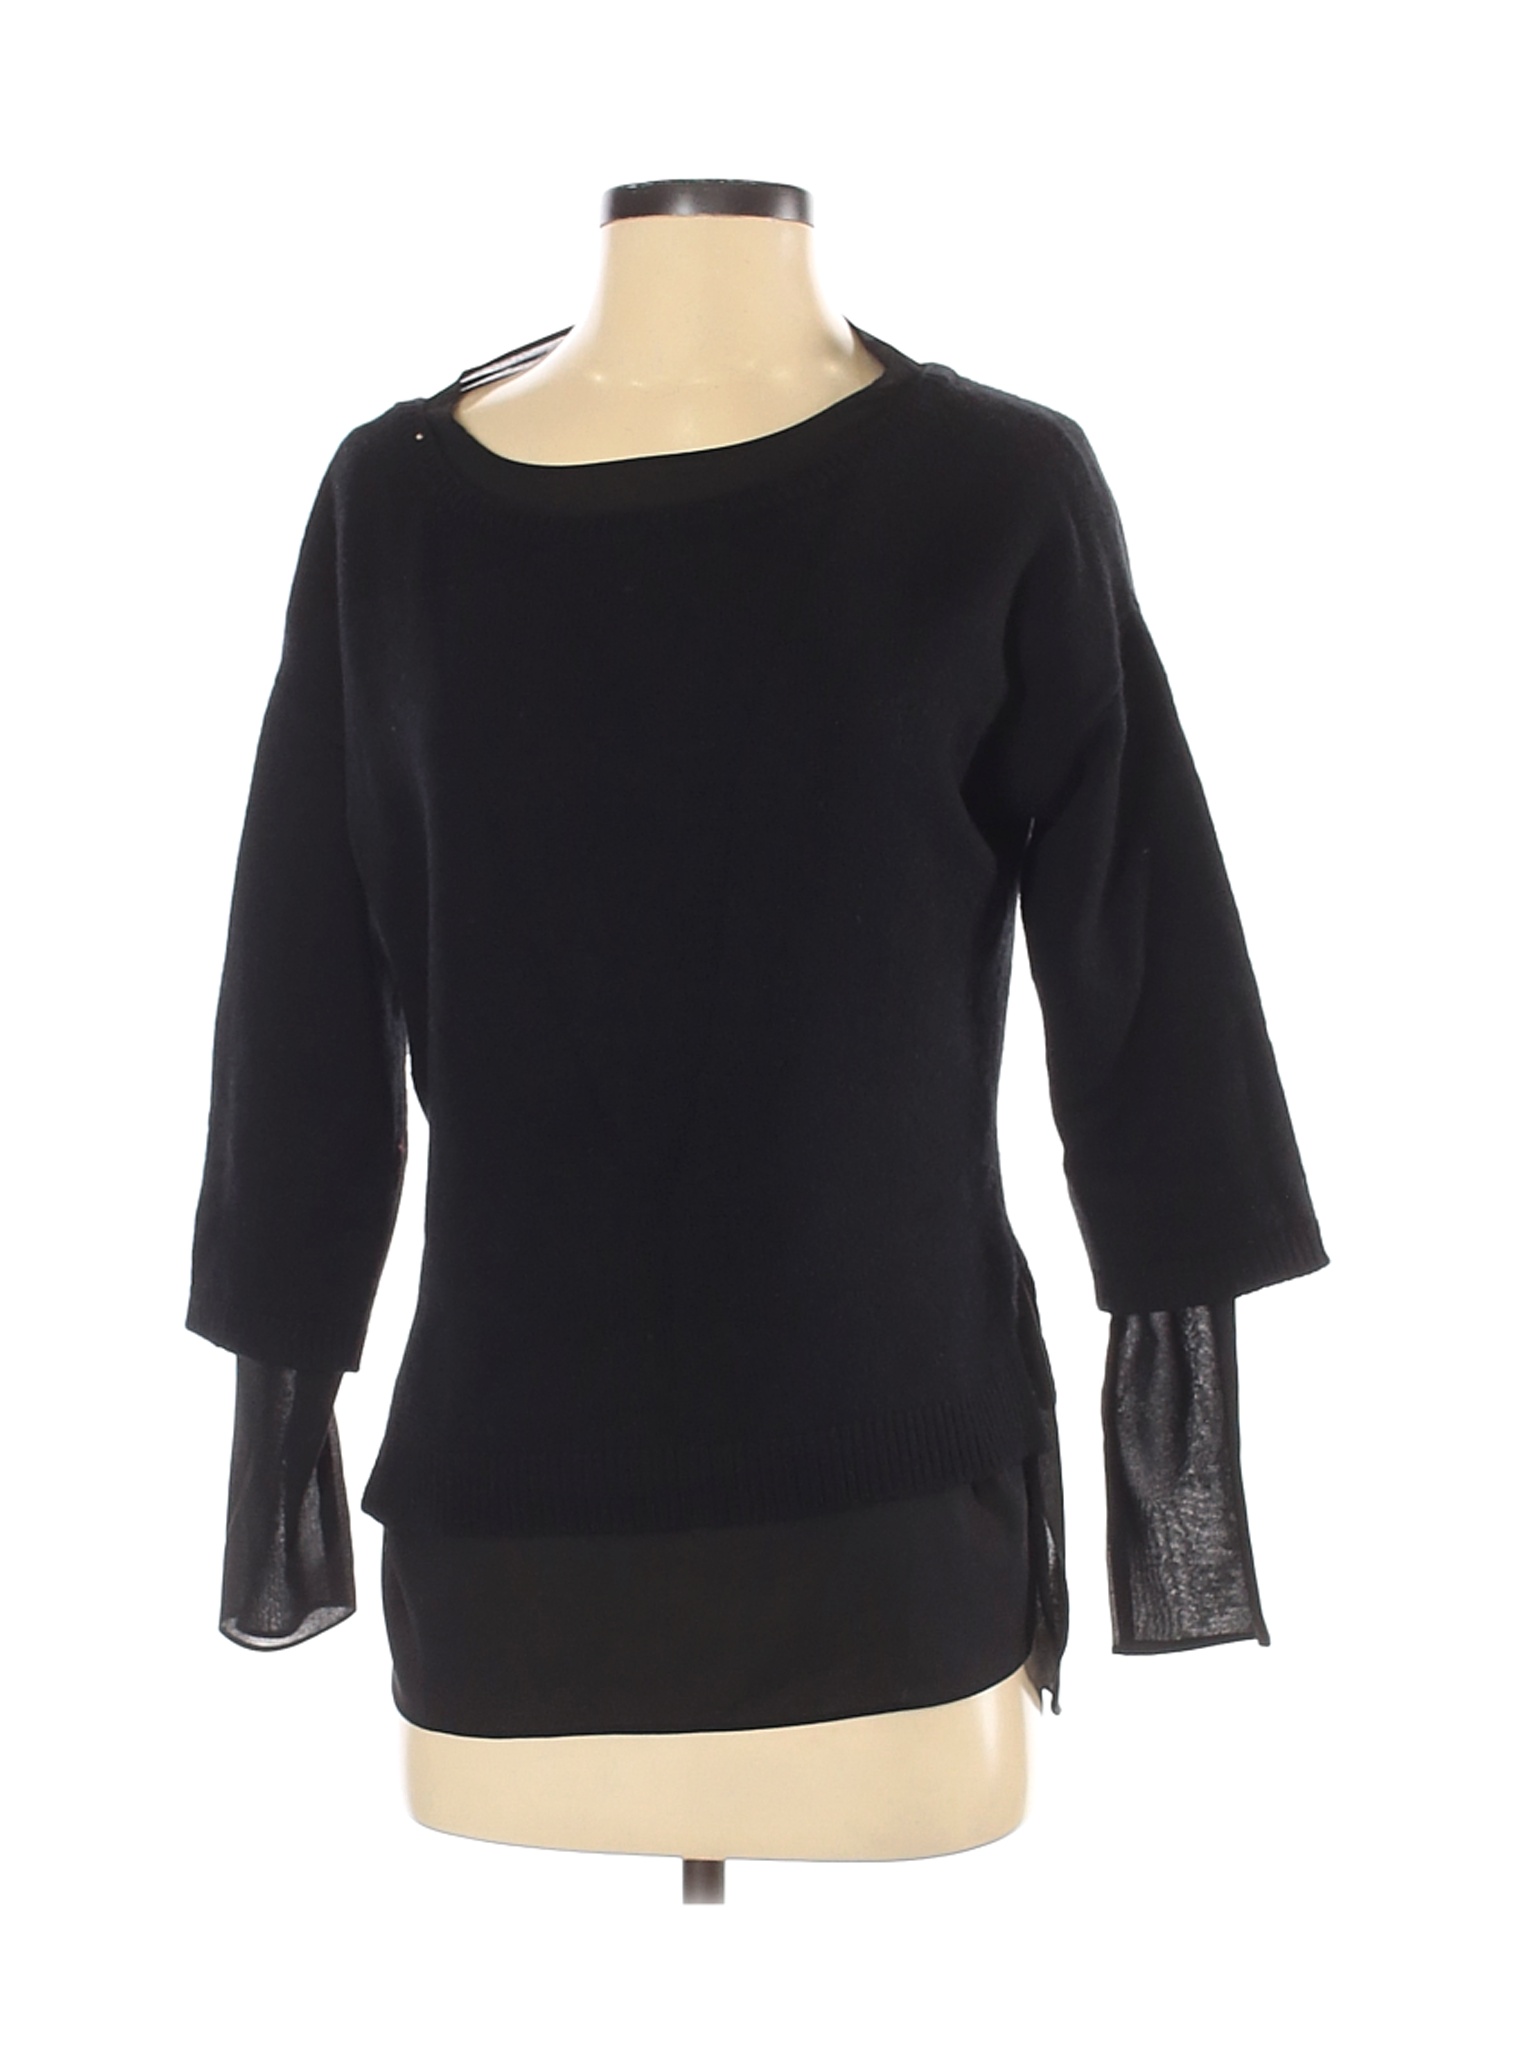 Ann Taylor Women Black Pullover Sweater S | eBay